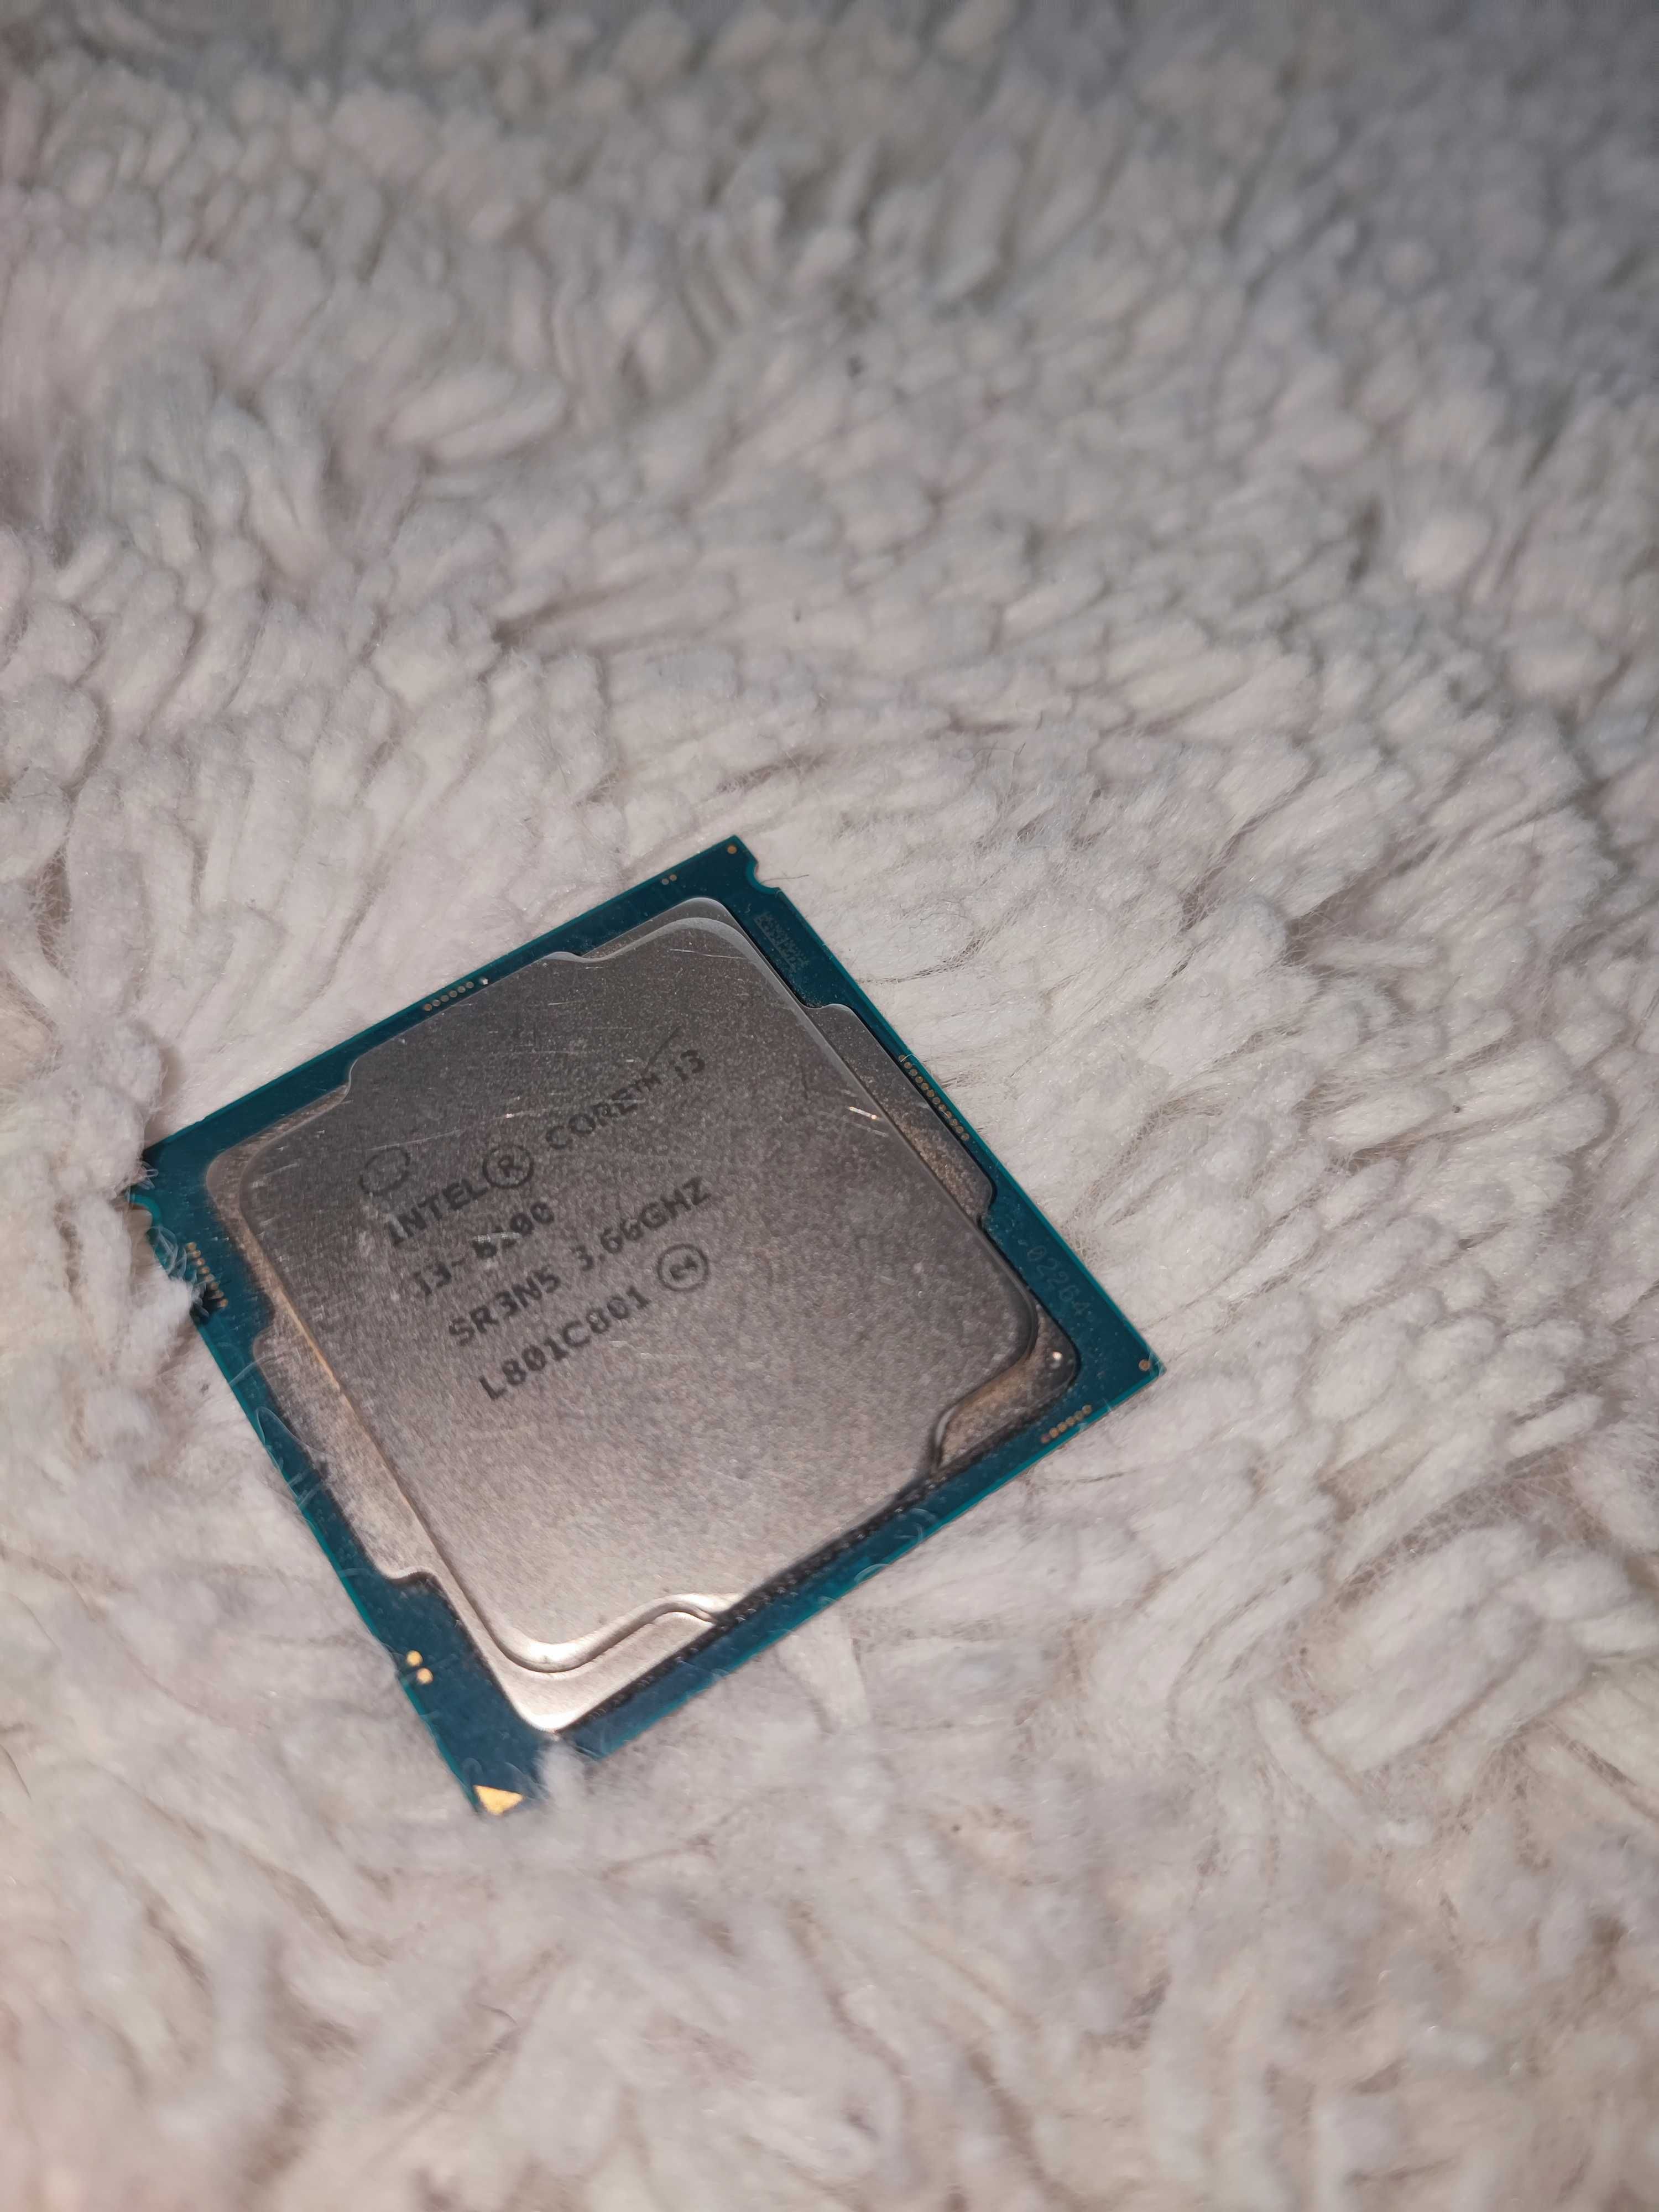 Procesor Intel core i3